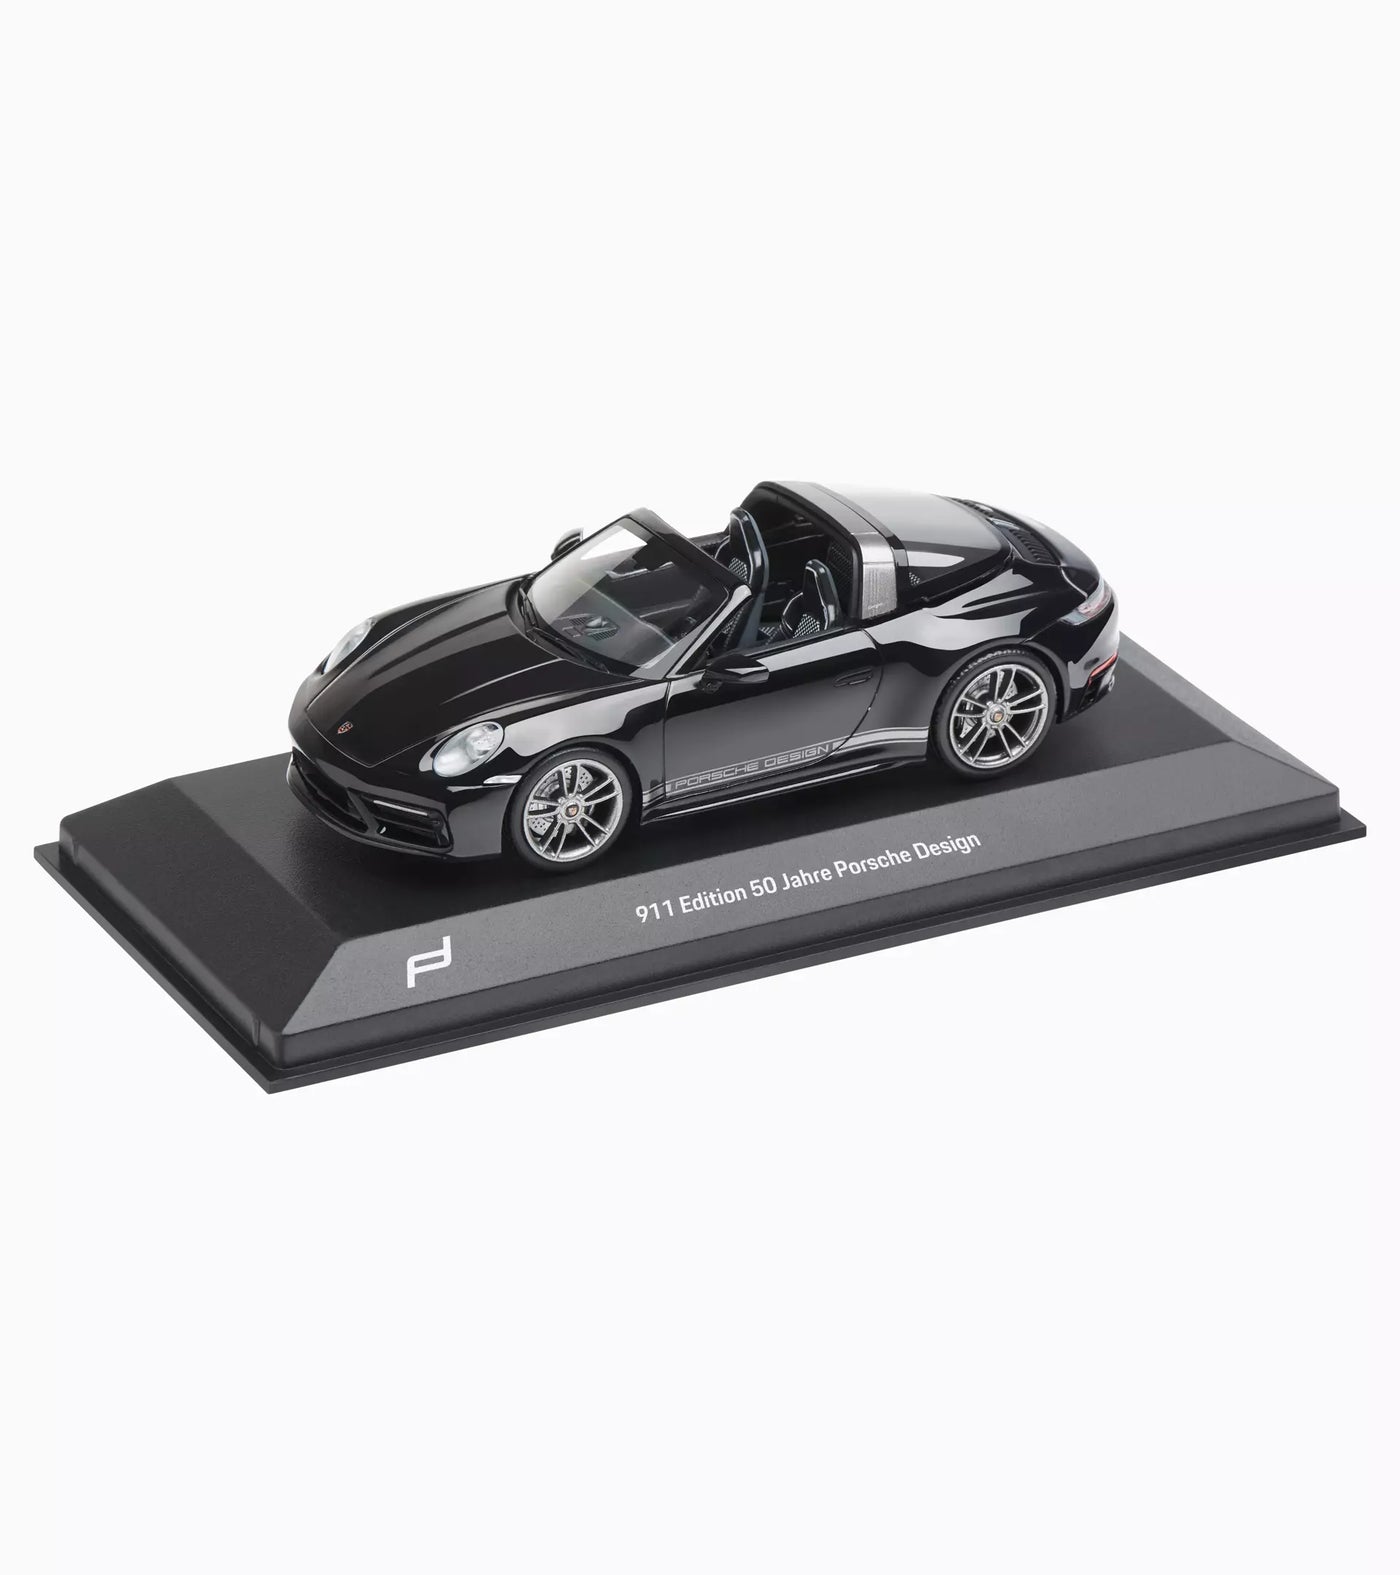 Porsche 911 Targa 4 GTS Model Car (Black) - 1:43 scale